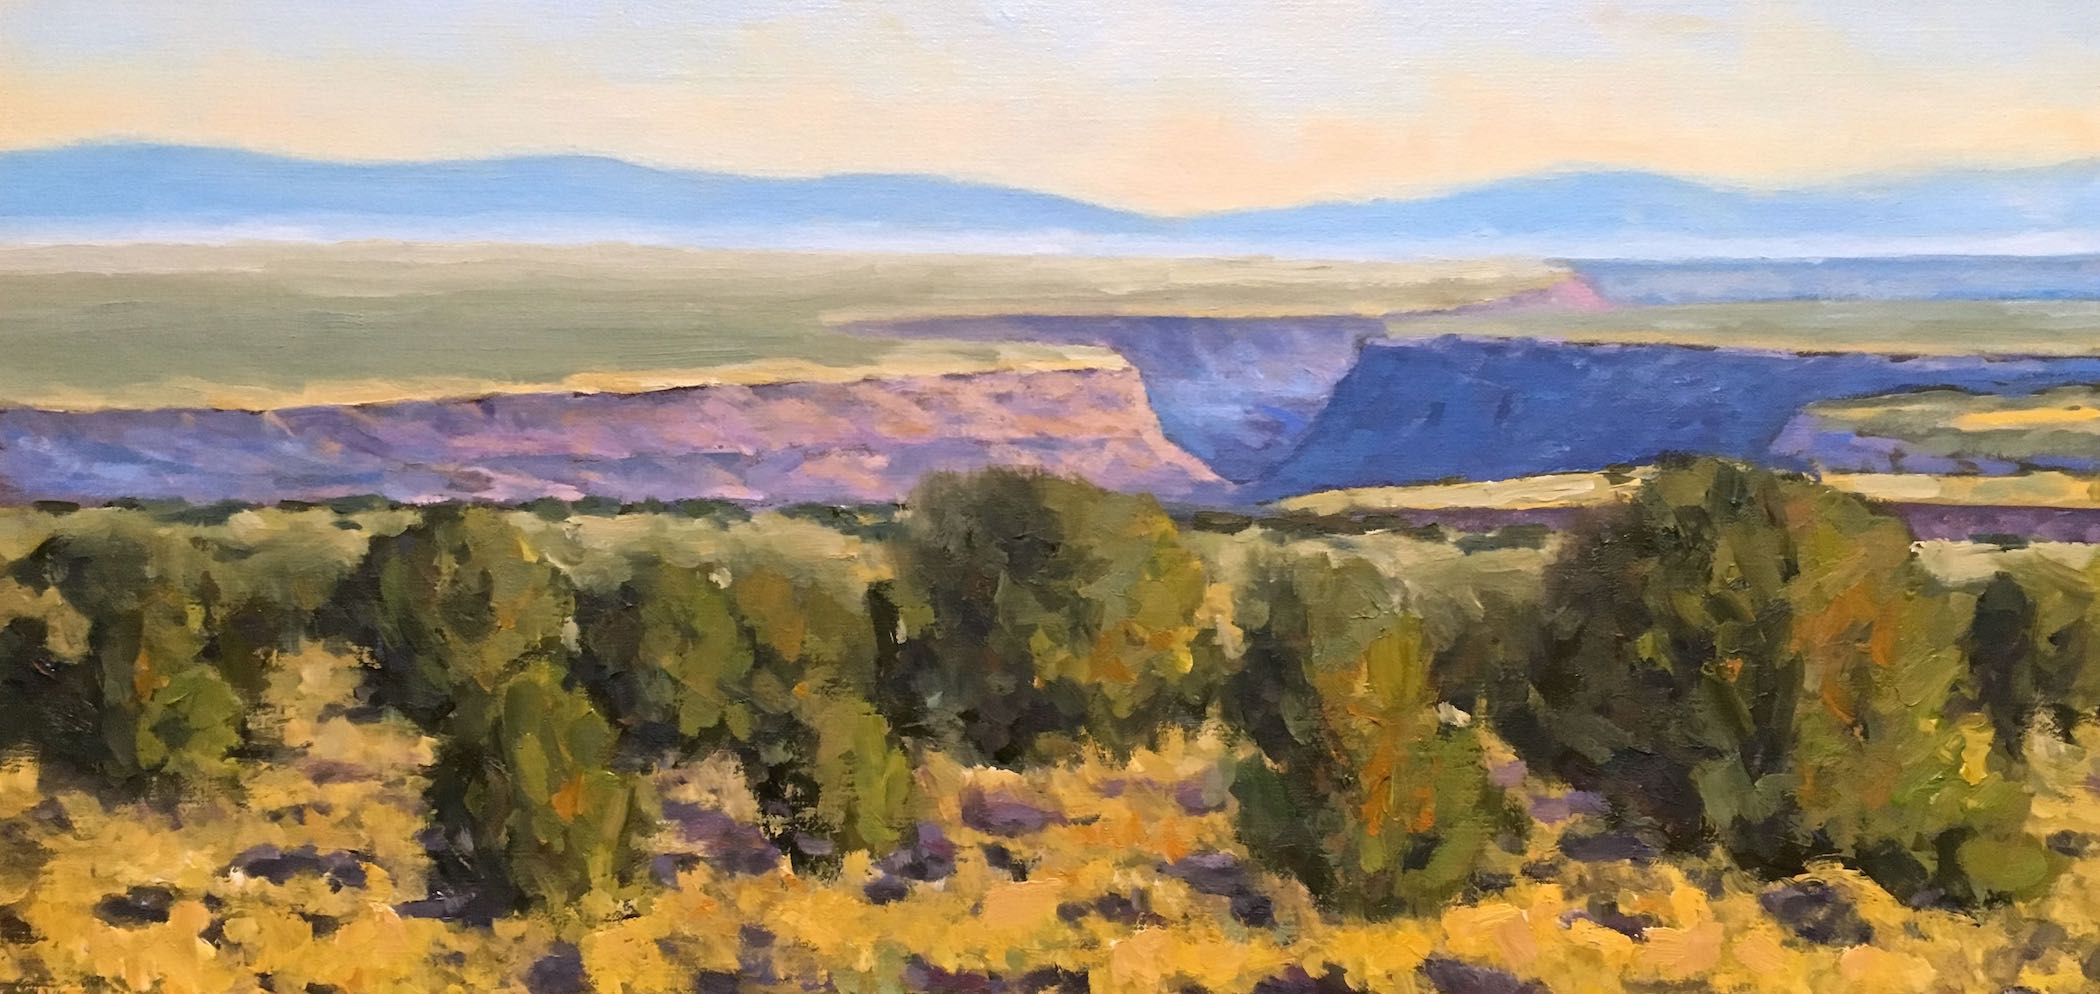 Chris Miller: Rio Grande Gorge Near Taos